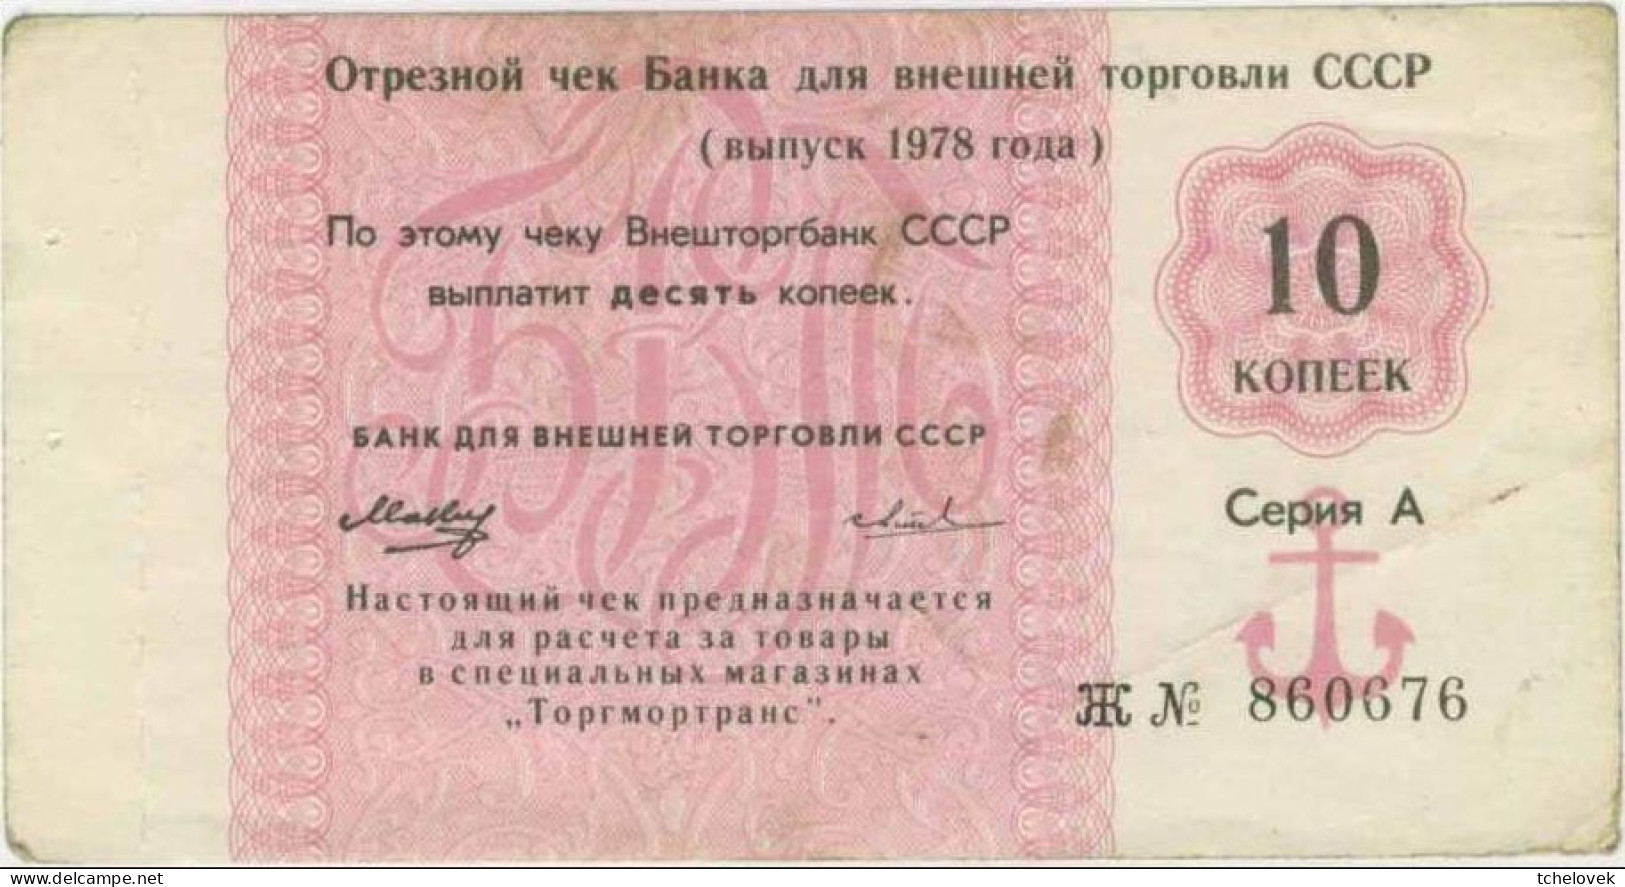 (Billets).Russie Russia URSS USSR Vneshposiltorg Vneshtorgbank 10 K 1978 N° 860676 Serie J. Foreign Exchange Certificate - Russia